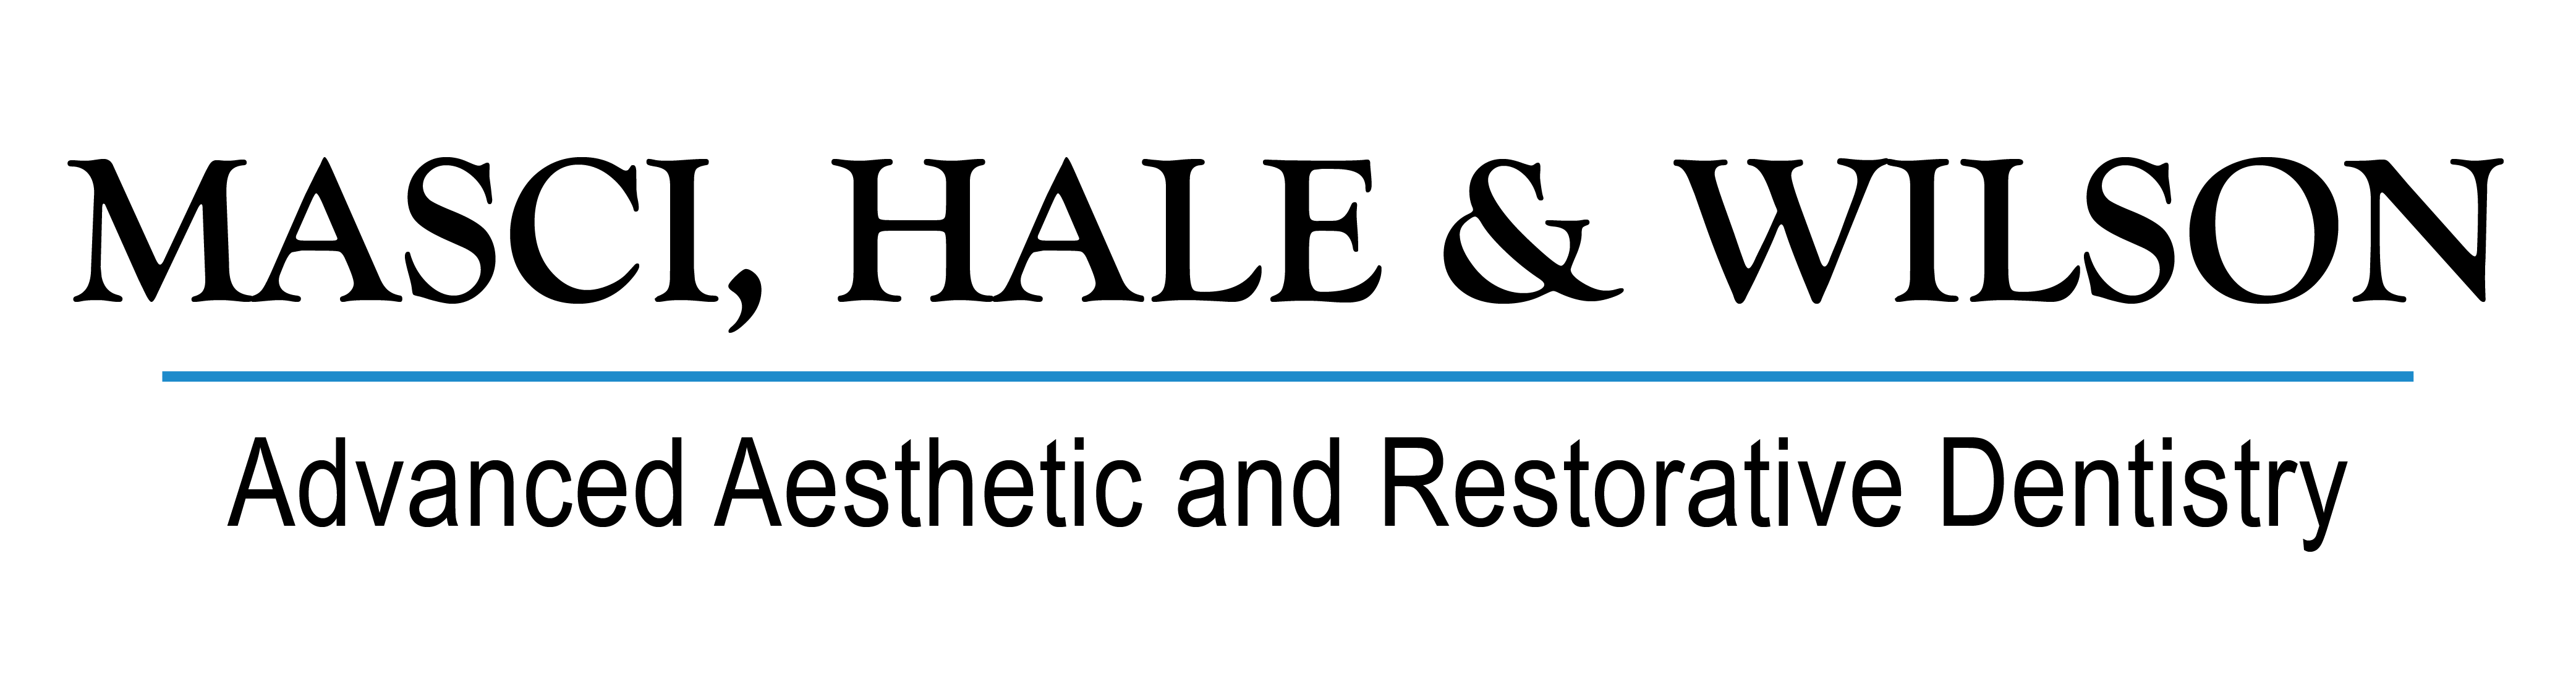 Masci, Hale & Wilson Advanced Aesthetic and Restorative Dentistry 